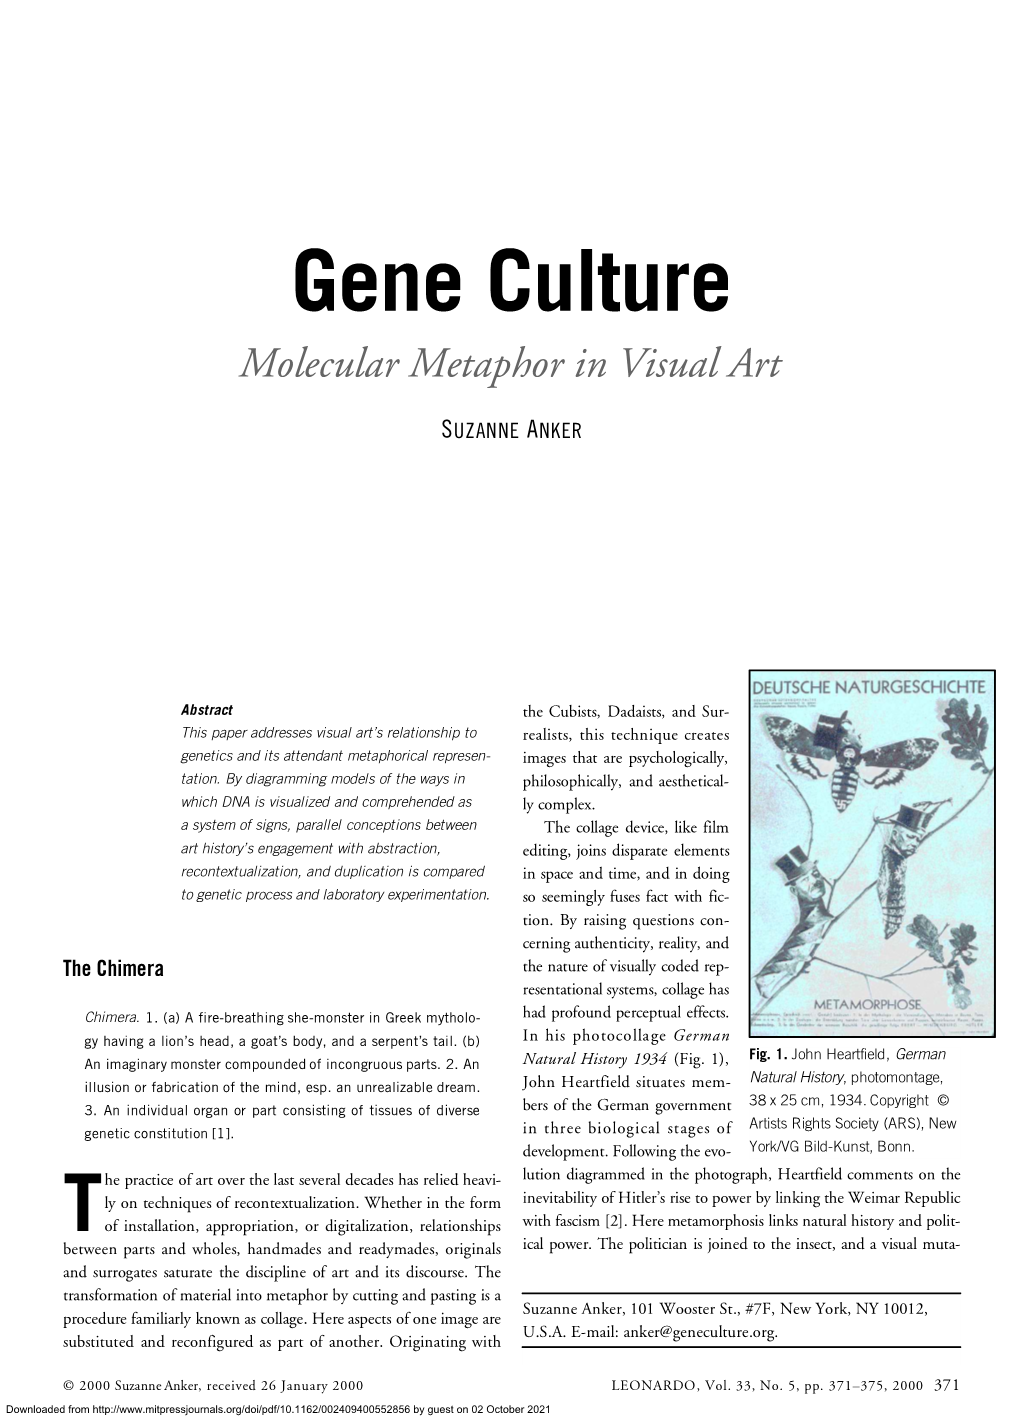 Gene Culture: Molecular Metaphor in Visual